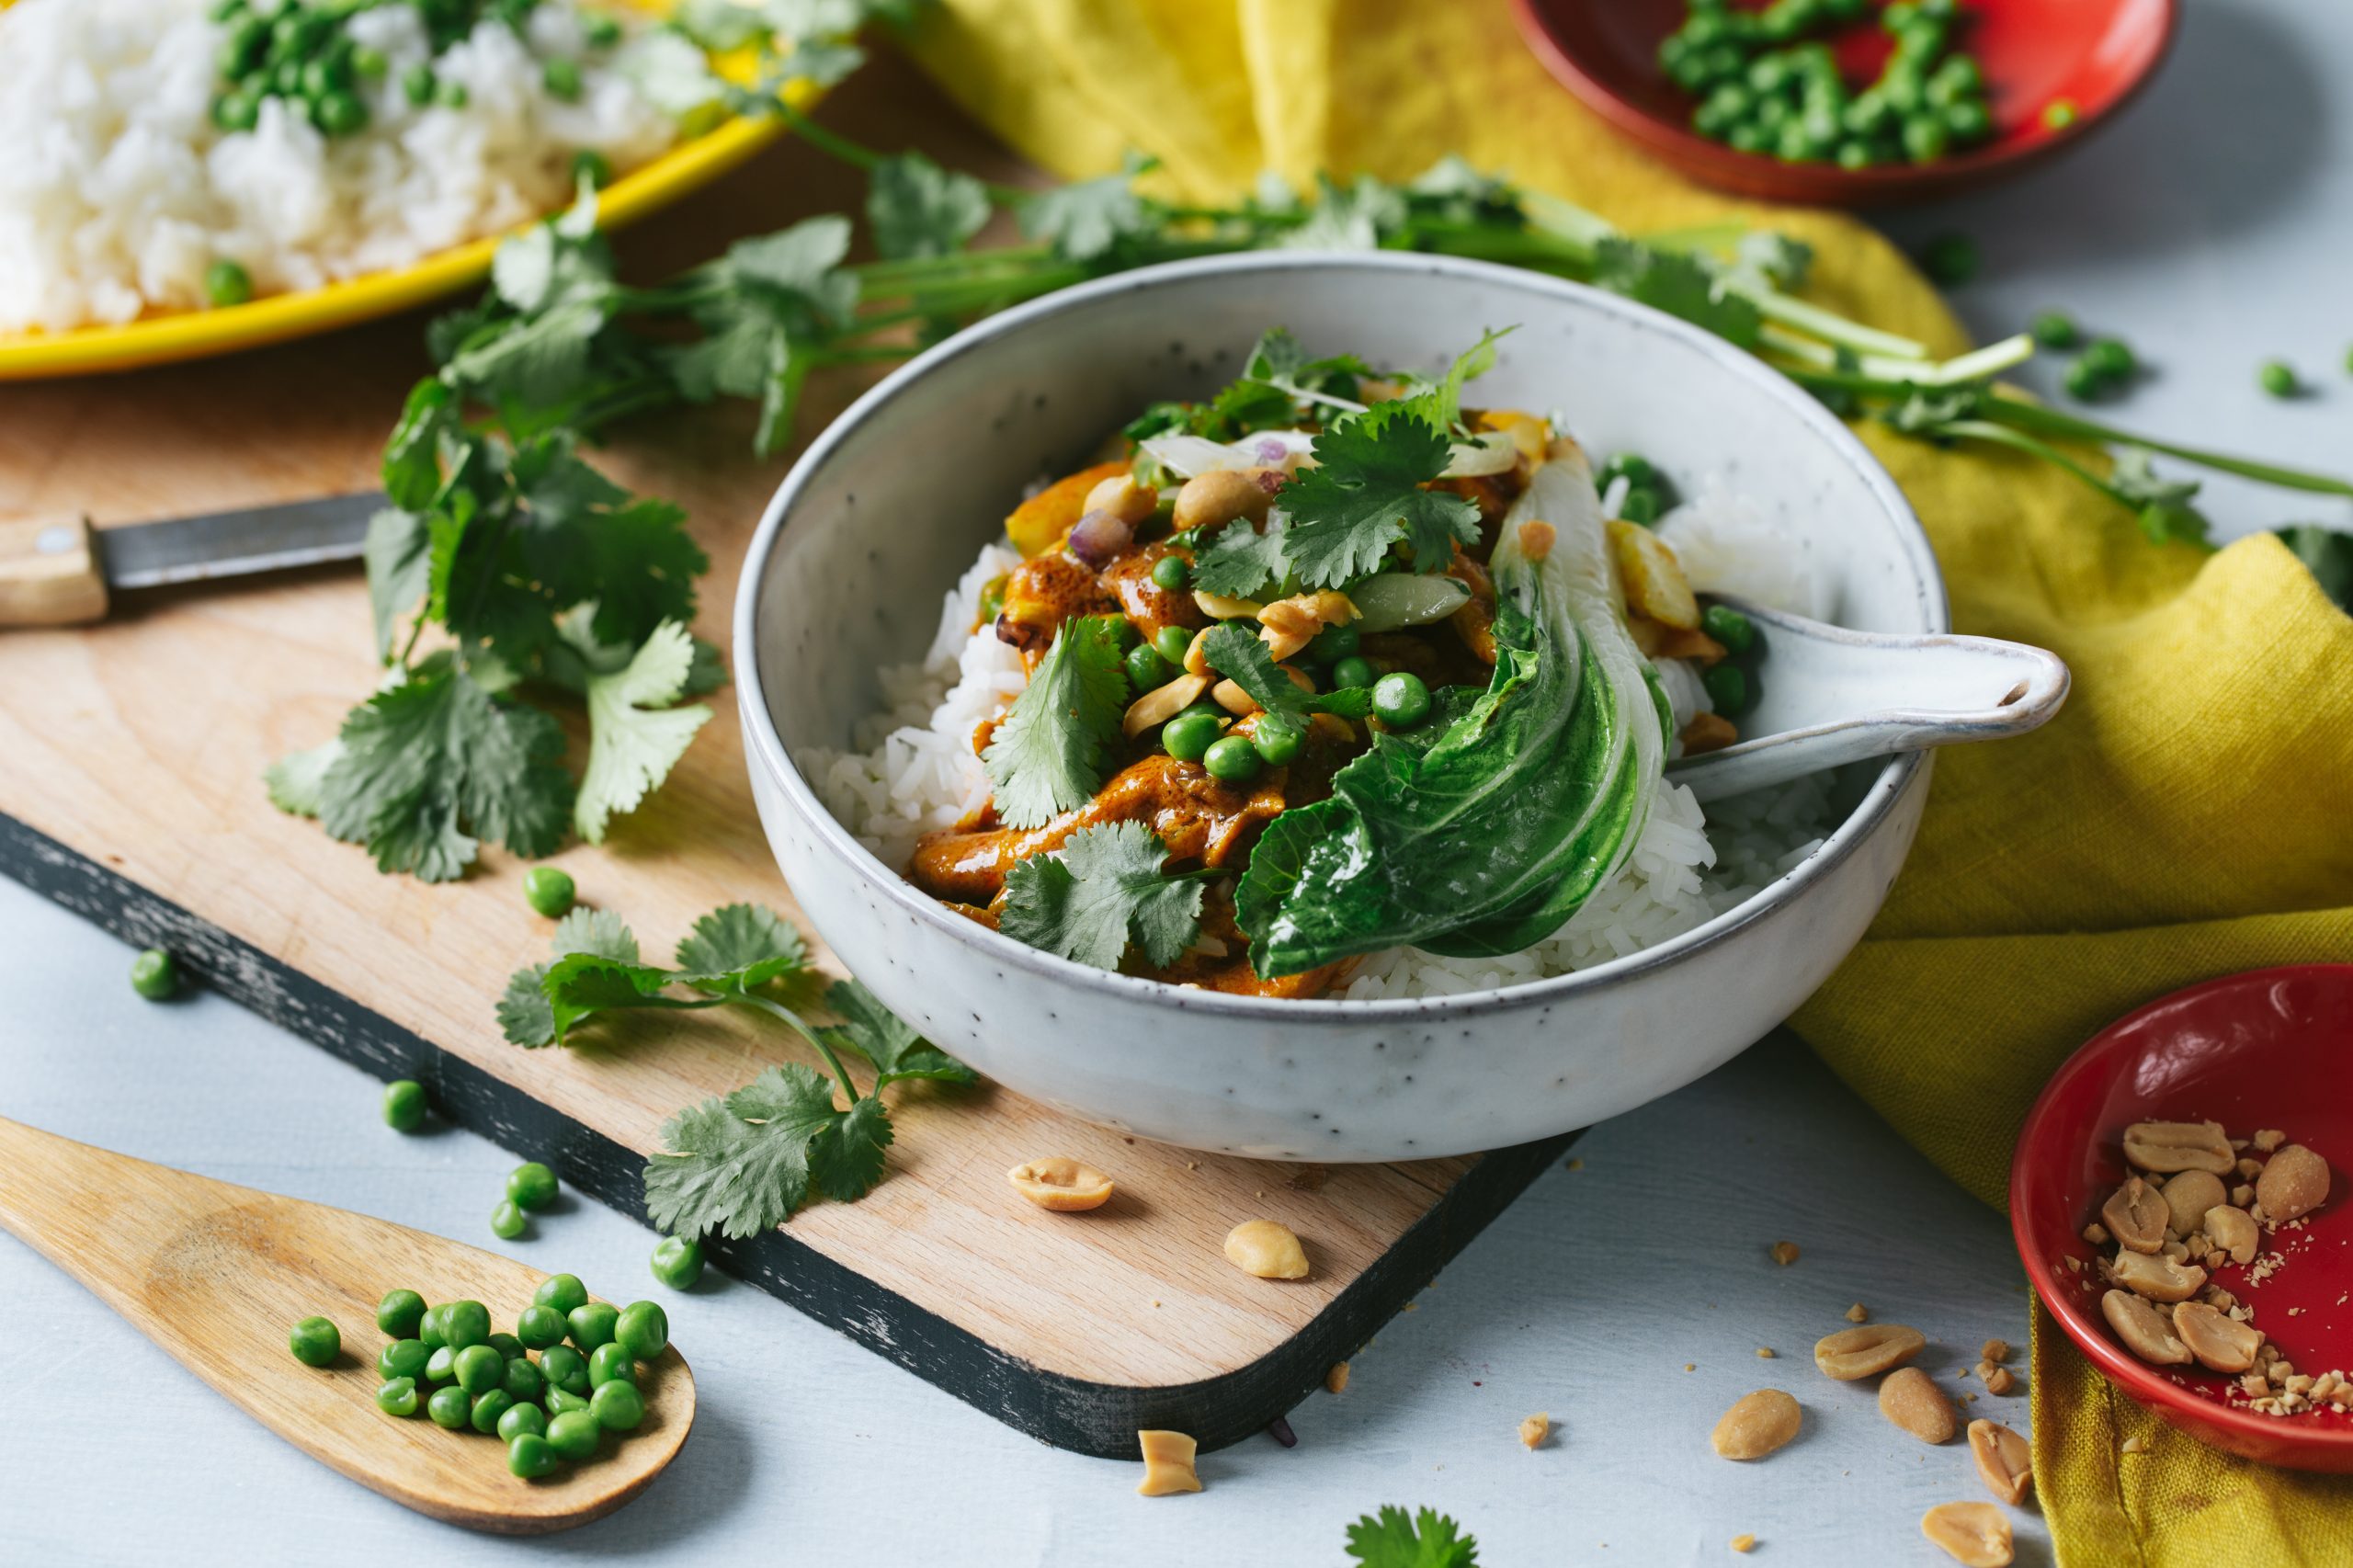 Lokken Ronde stroomkring Thaise gele curry met kip, paksoi en rijst - Fairtrade Original